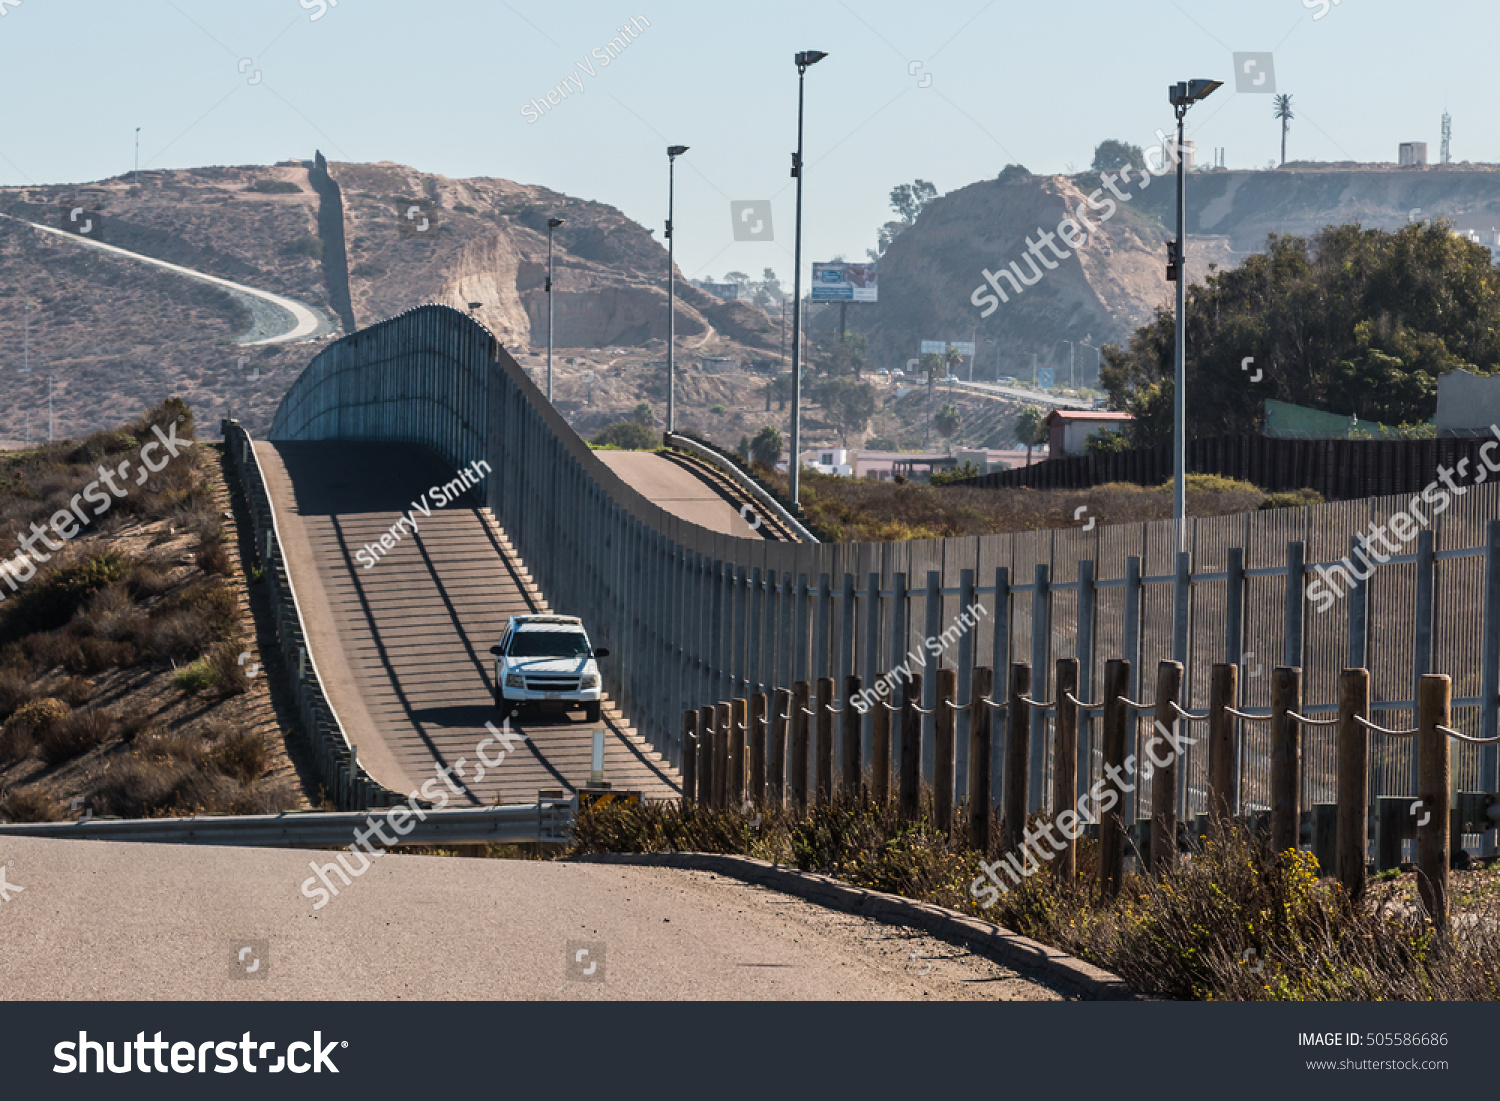 Border Patrol vehicle patrolling along the fence of the international border between San Diego, California and Tijuana, Mexico #505586686